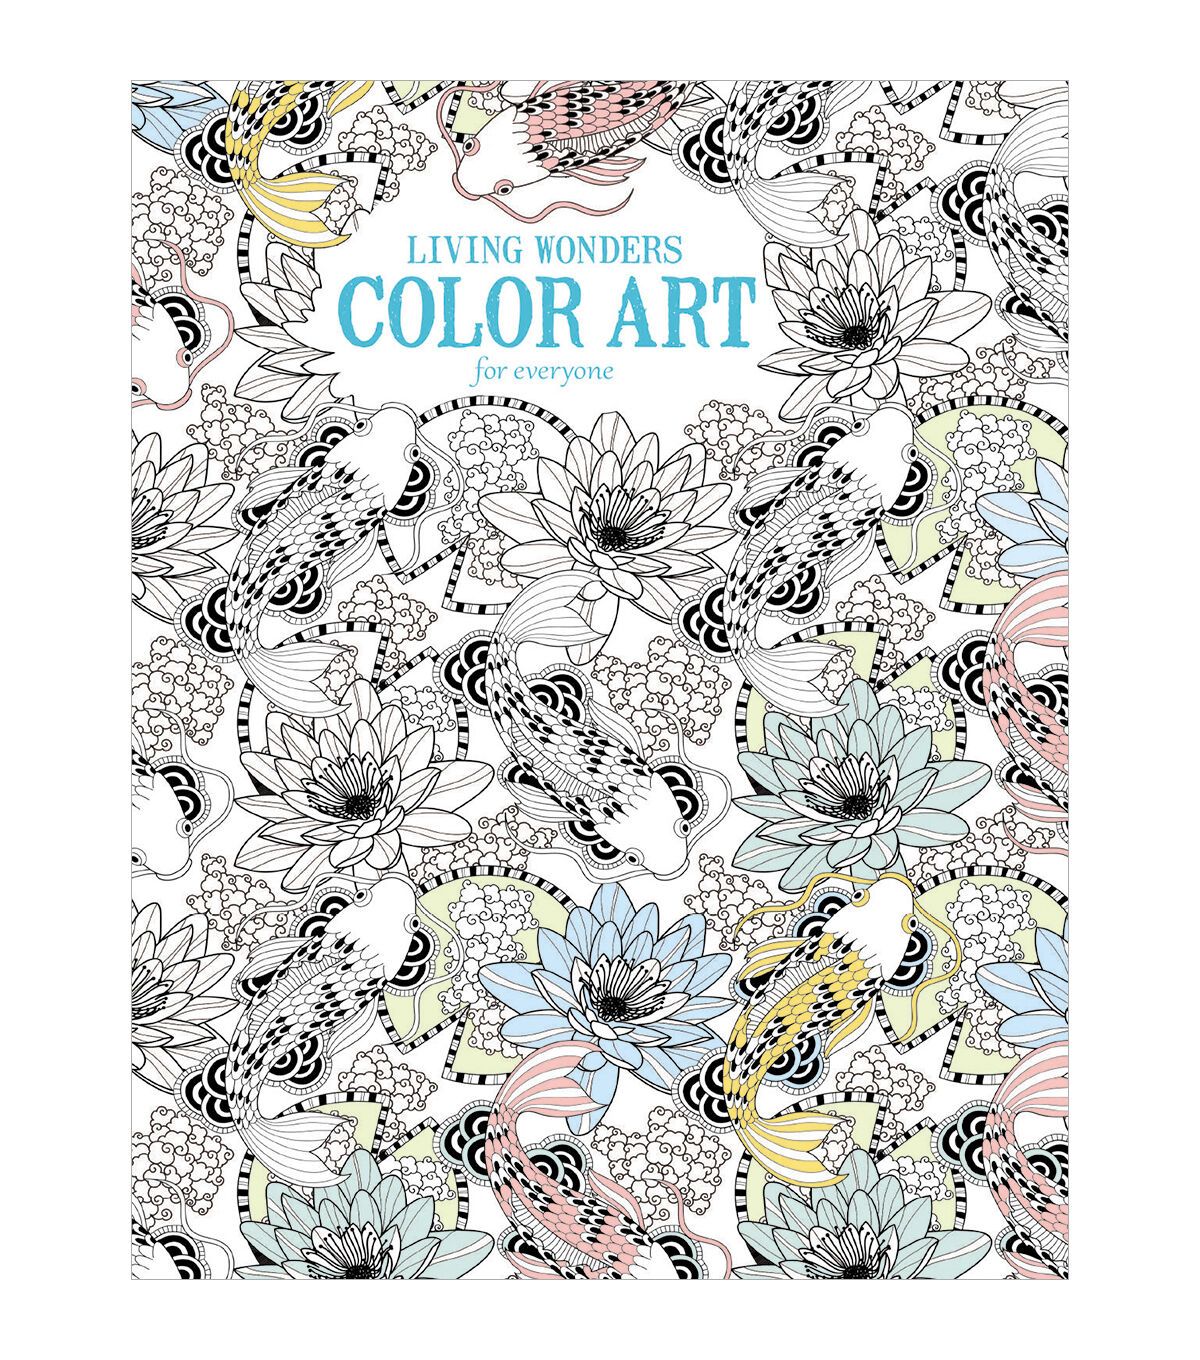 2 New LEISURE ARTS Color Art Coloring Books Paisley Wonders & Design Wonders 